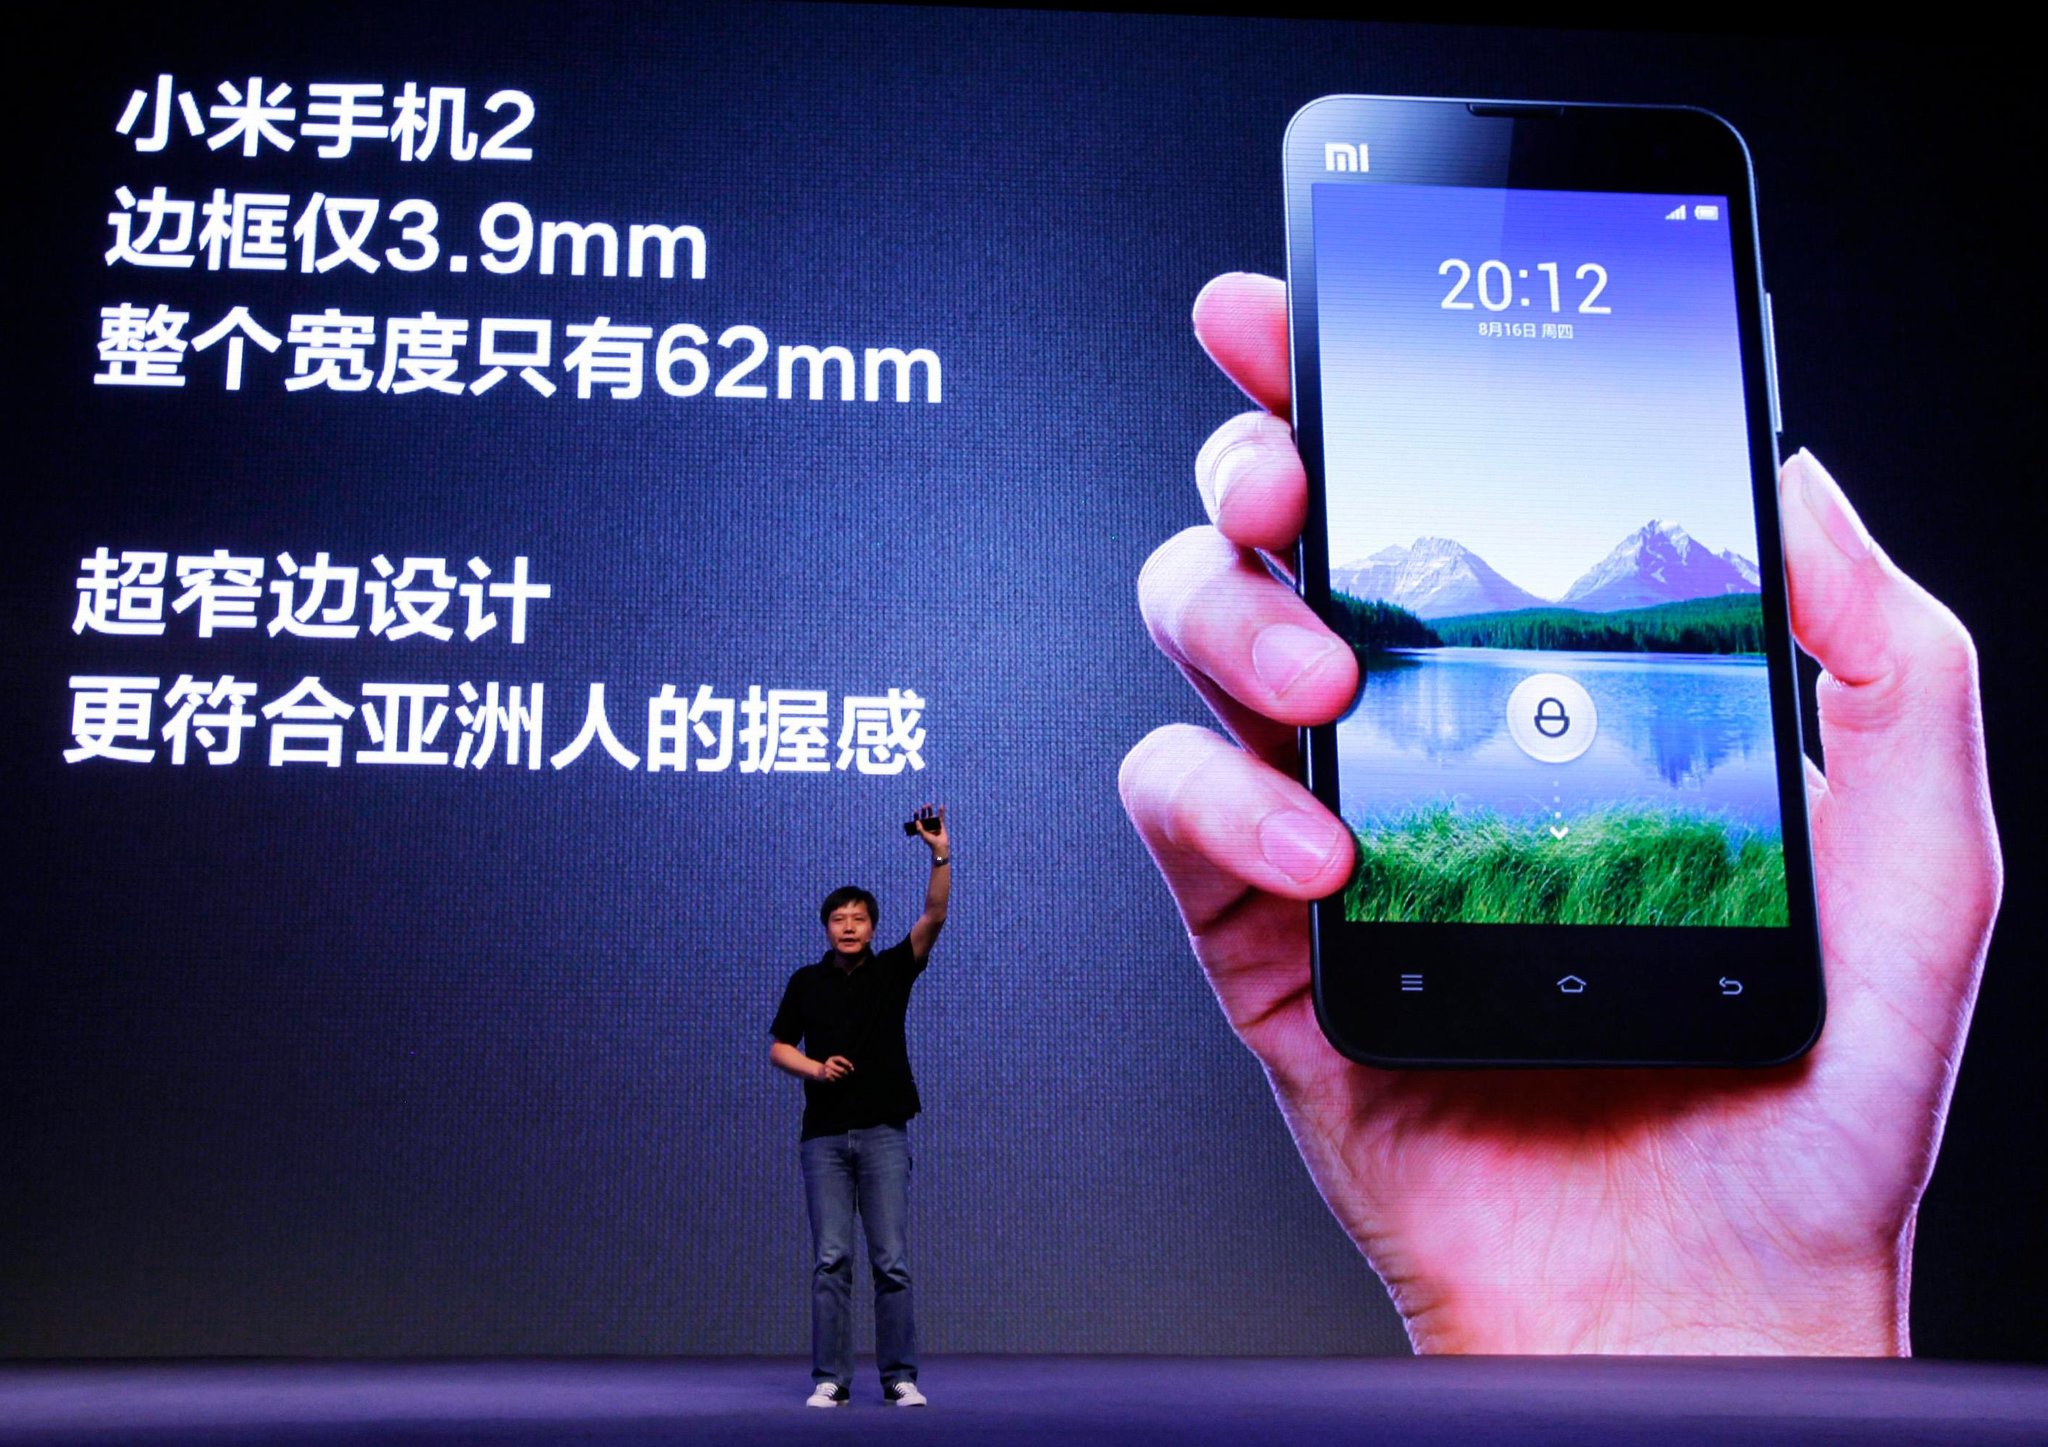 How Has Xiaomi Leapfrogged Apple in China?